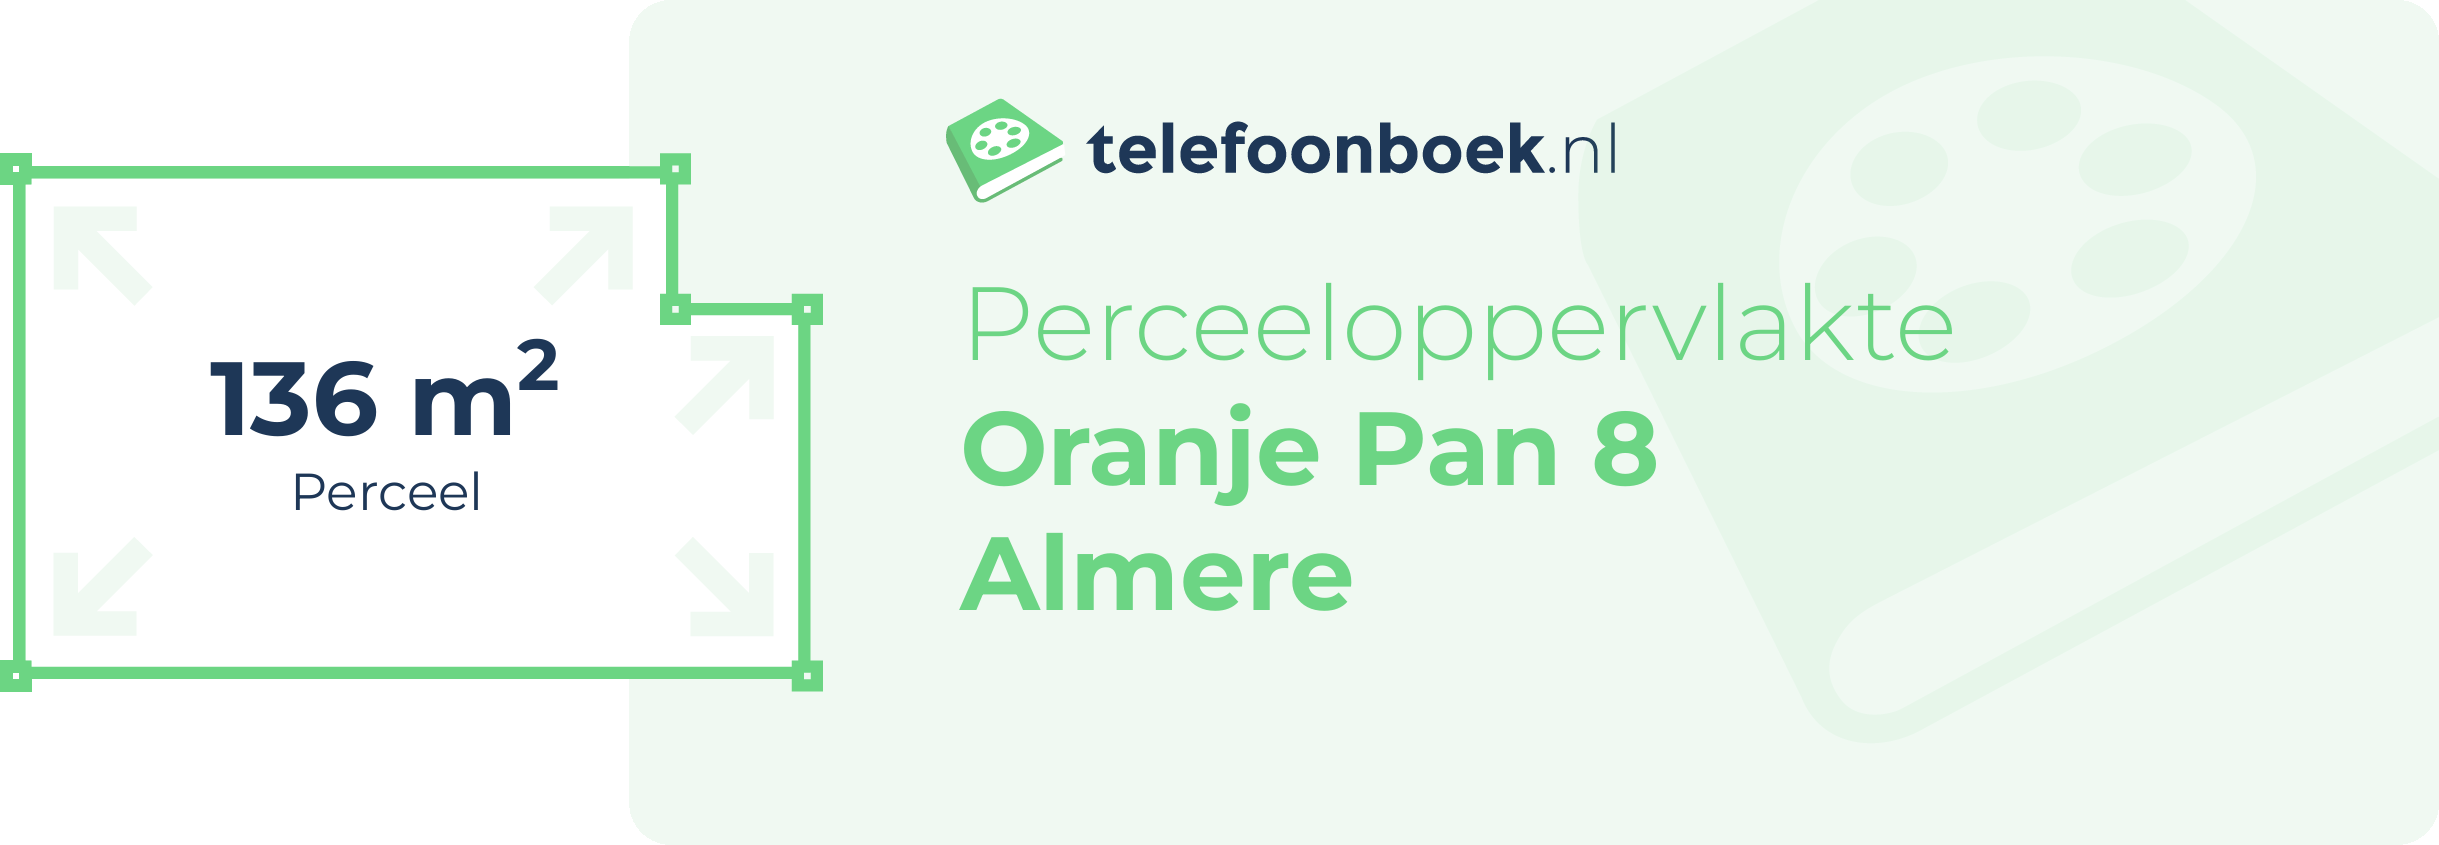 Perceeloppervlakte Oranje Pan 8 Almere